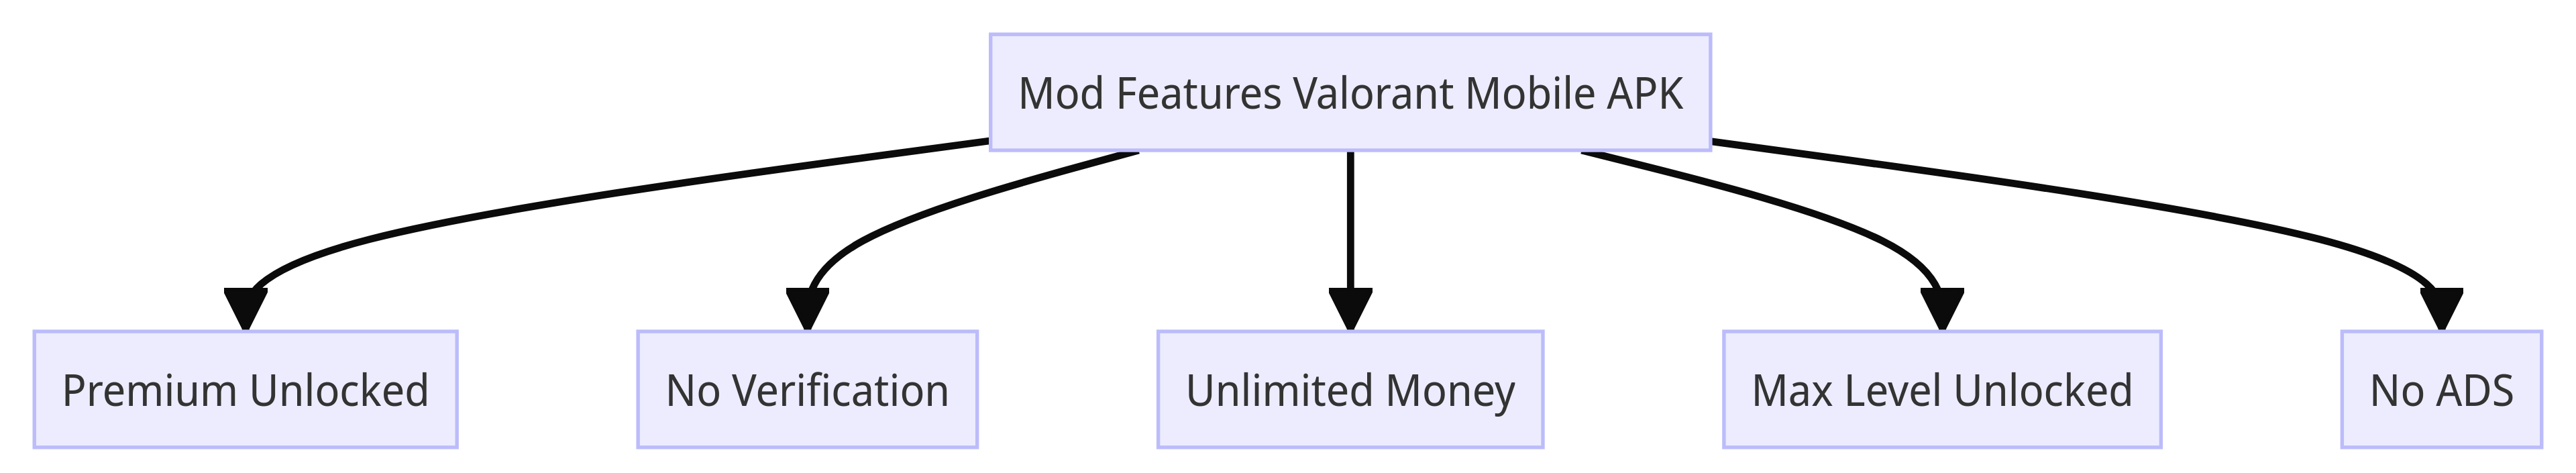 Mod Features Valorant Mobile APK